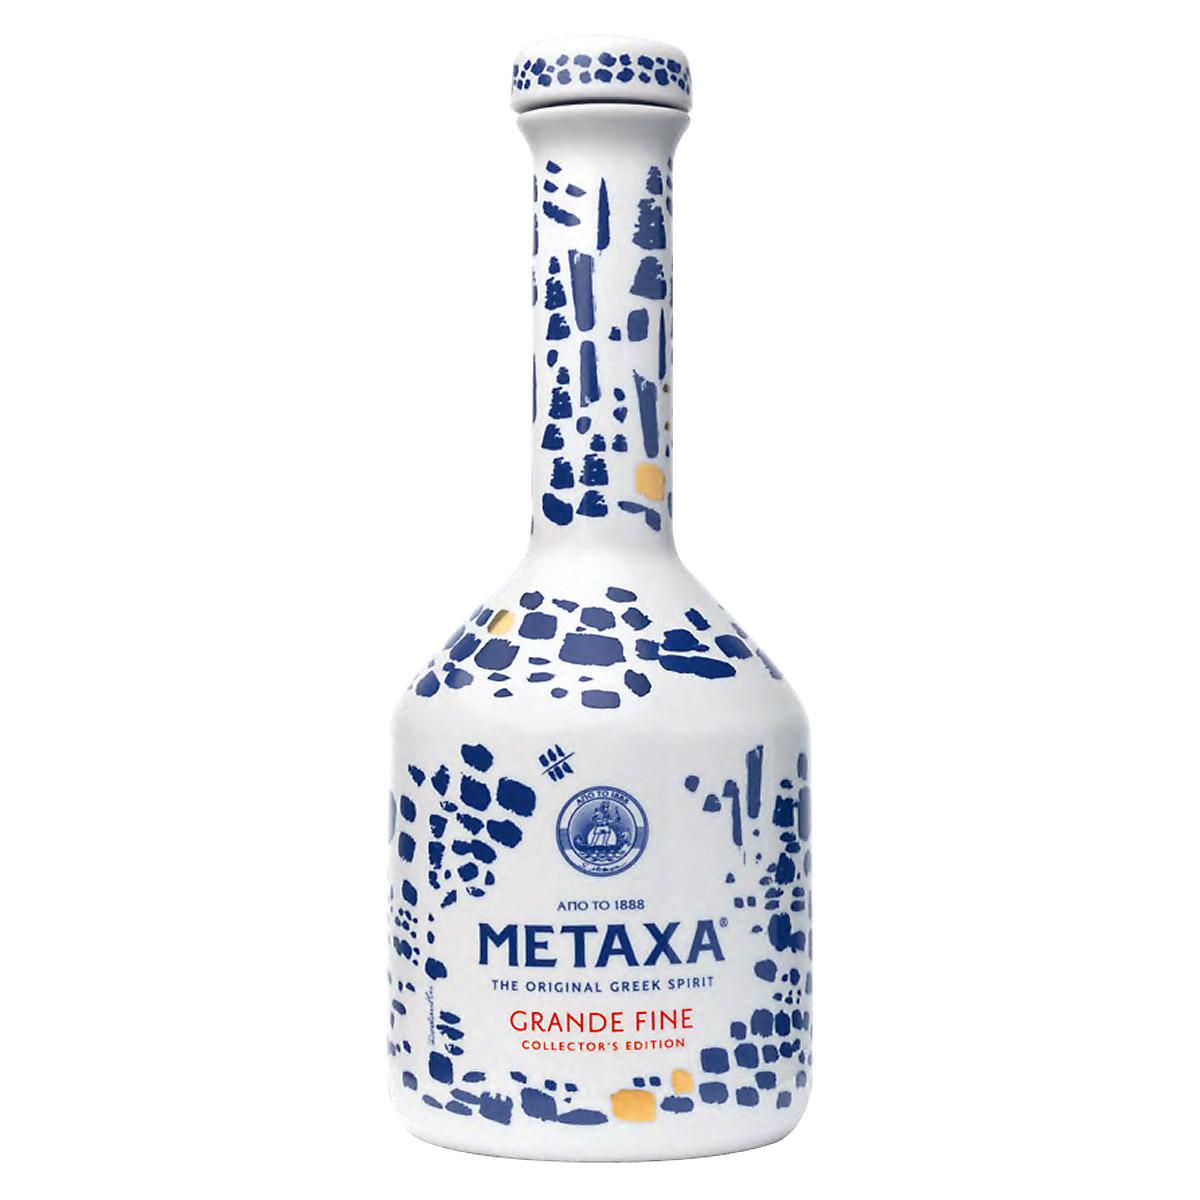 Metaxa Grande Fine Collectors Edition Keramik (0,7 l) plus Glas